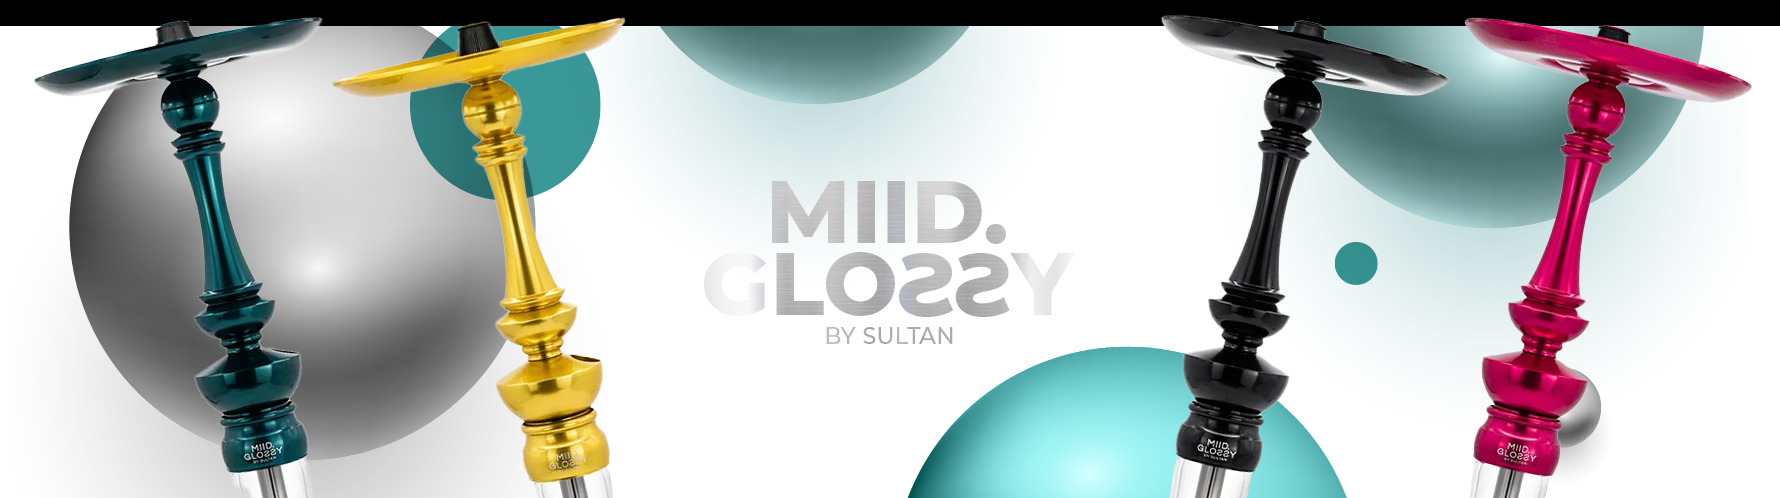 Miid Glossy Sultan (04/24)